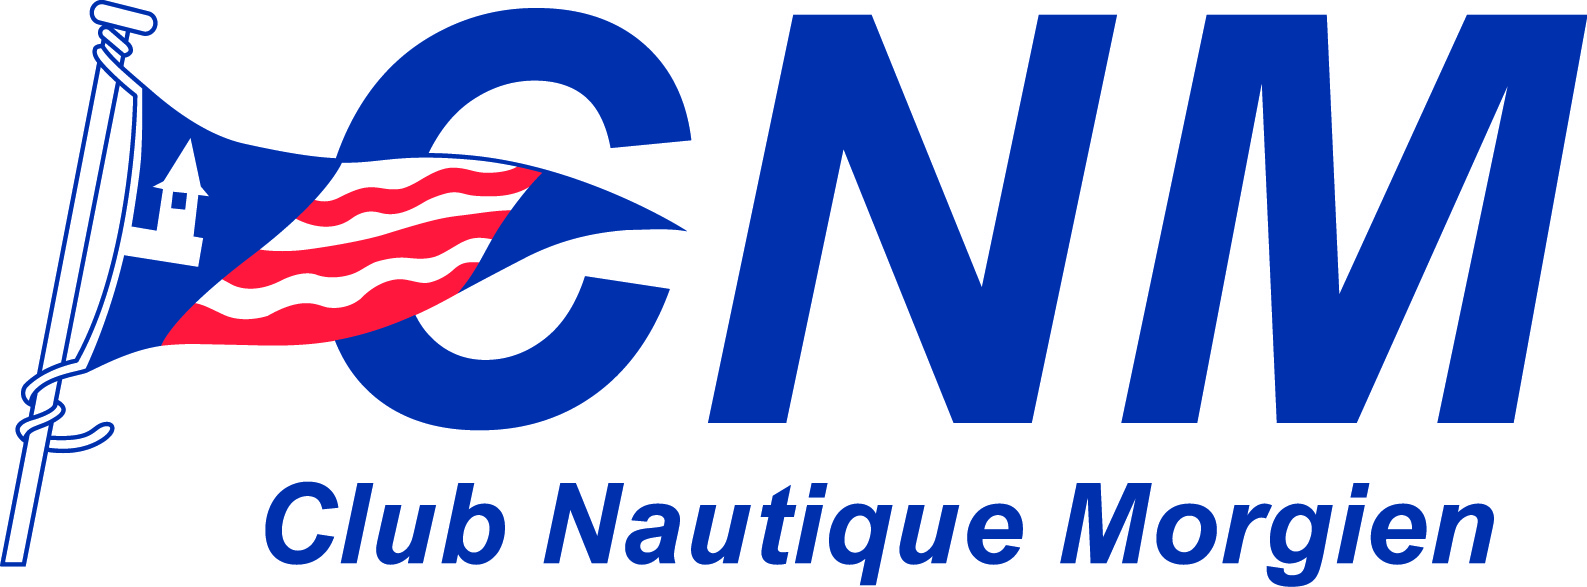 CNM_logo_NEW_A1 - .JPEG.jpg